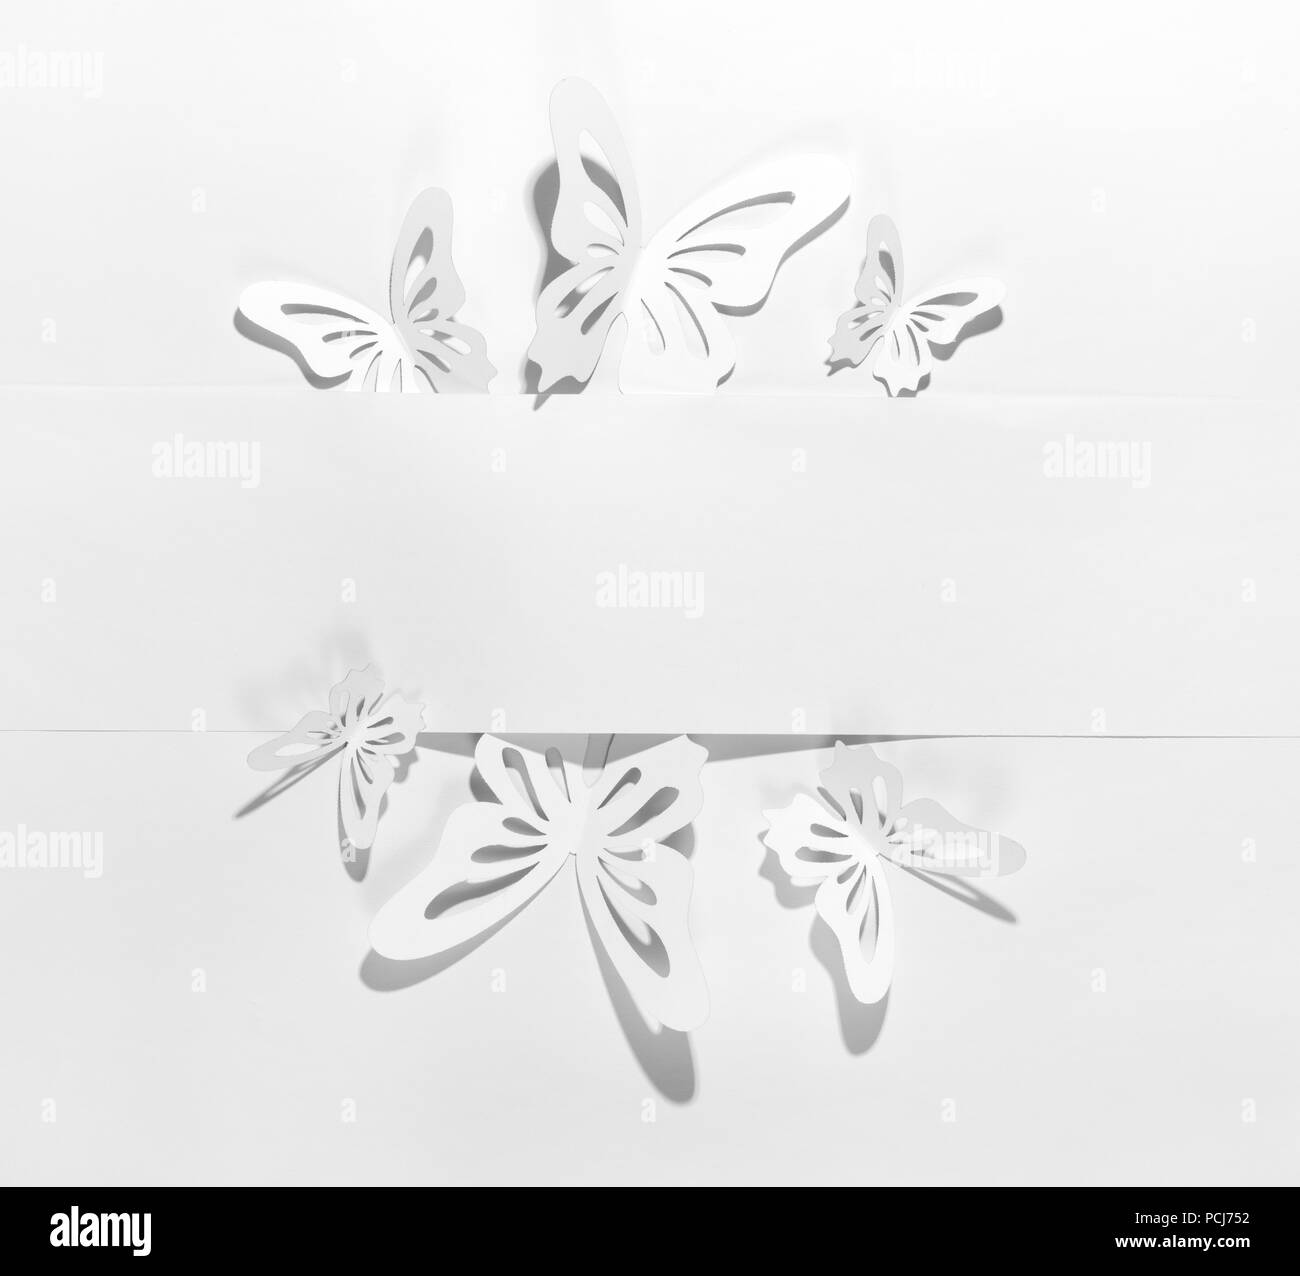 Papel mariposa decoracion fotografías e imágenes de alta resolución - Alamy